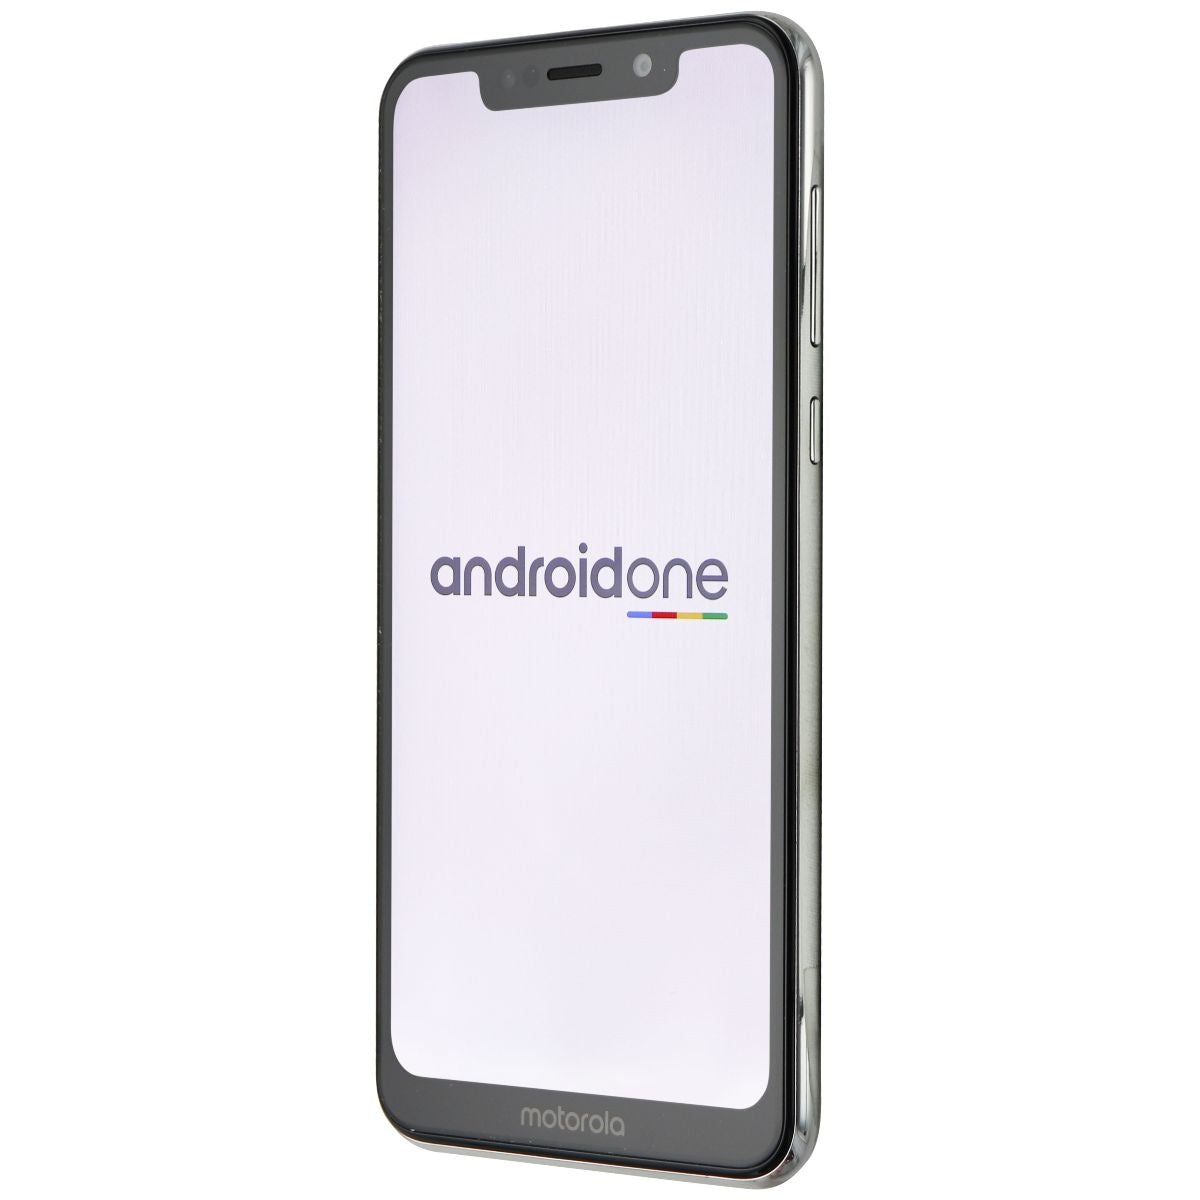 Motorola One (5.9-inch) Smartphone (XT1941-3) GSM + CDMA - 64GB/White Cell Phones & Smartphones Motorola    - Simple Cell Bulk Wholesale Pricing - USA Seller